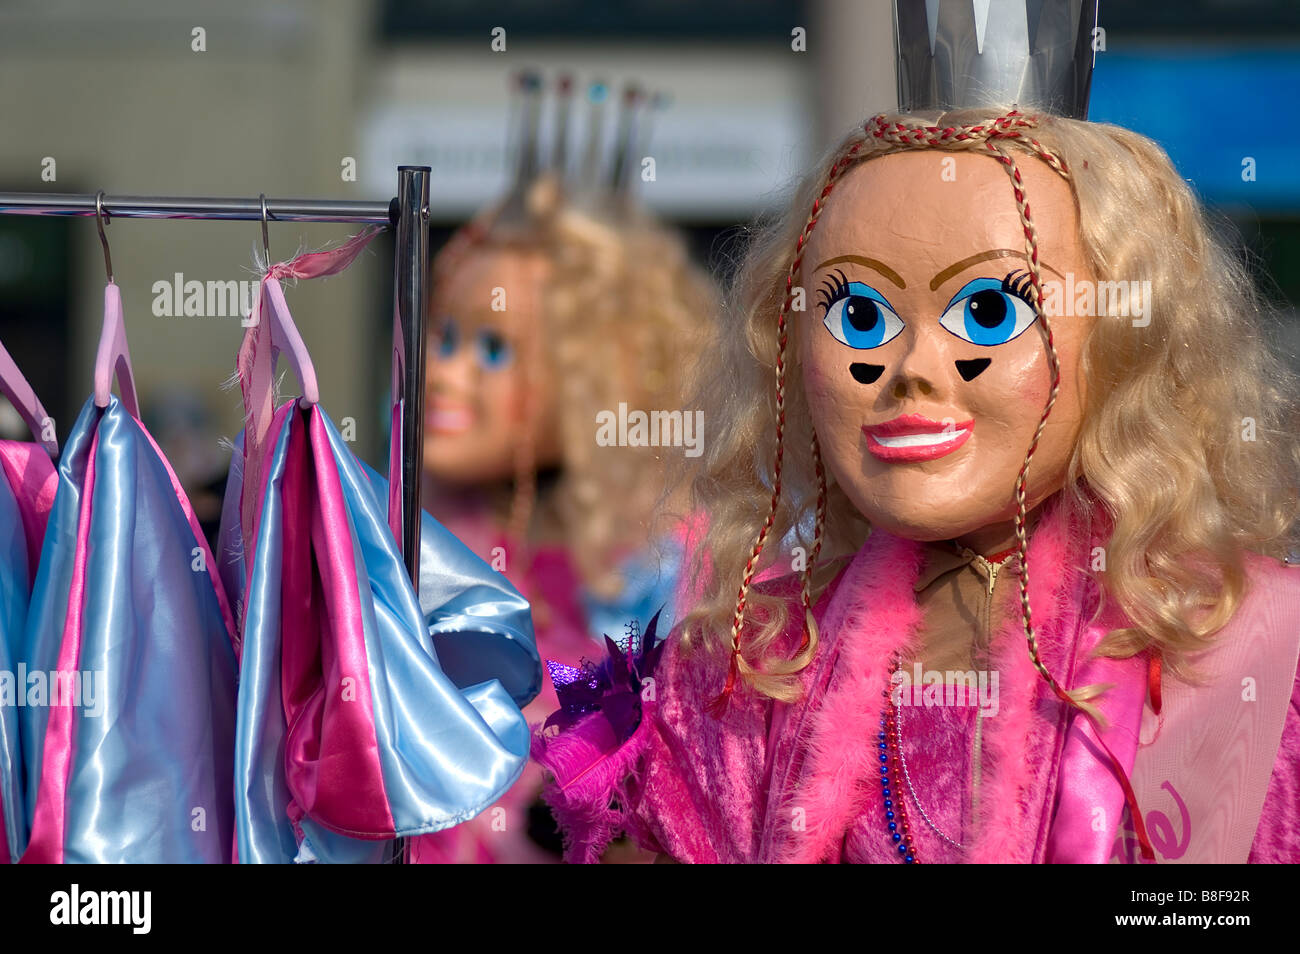 https://c8.alamy.com/comp/B8F92R/funny-barbie-carnival-costume-during-fasnacht-in-lucerne-switzerland-B8F92R.jpg